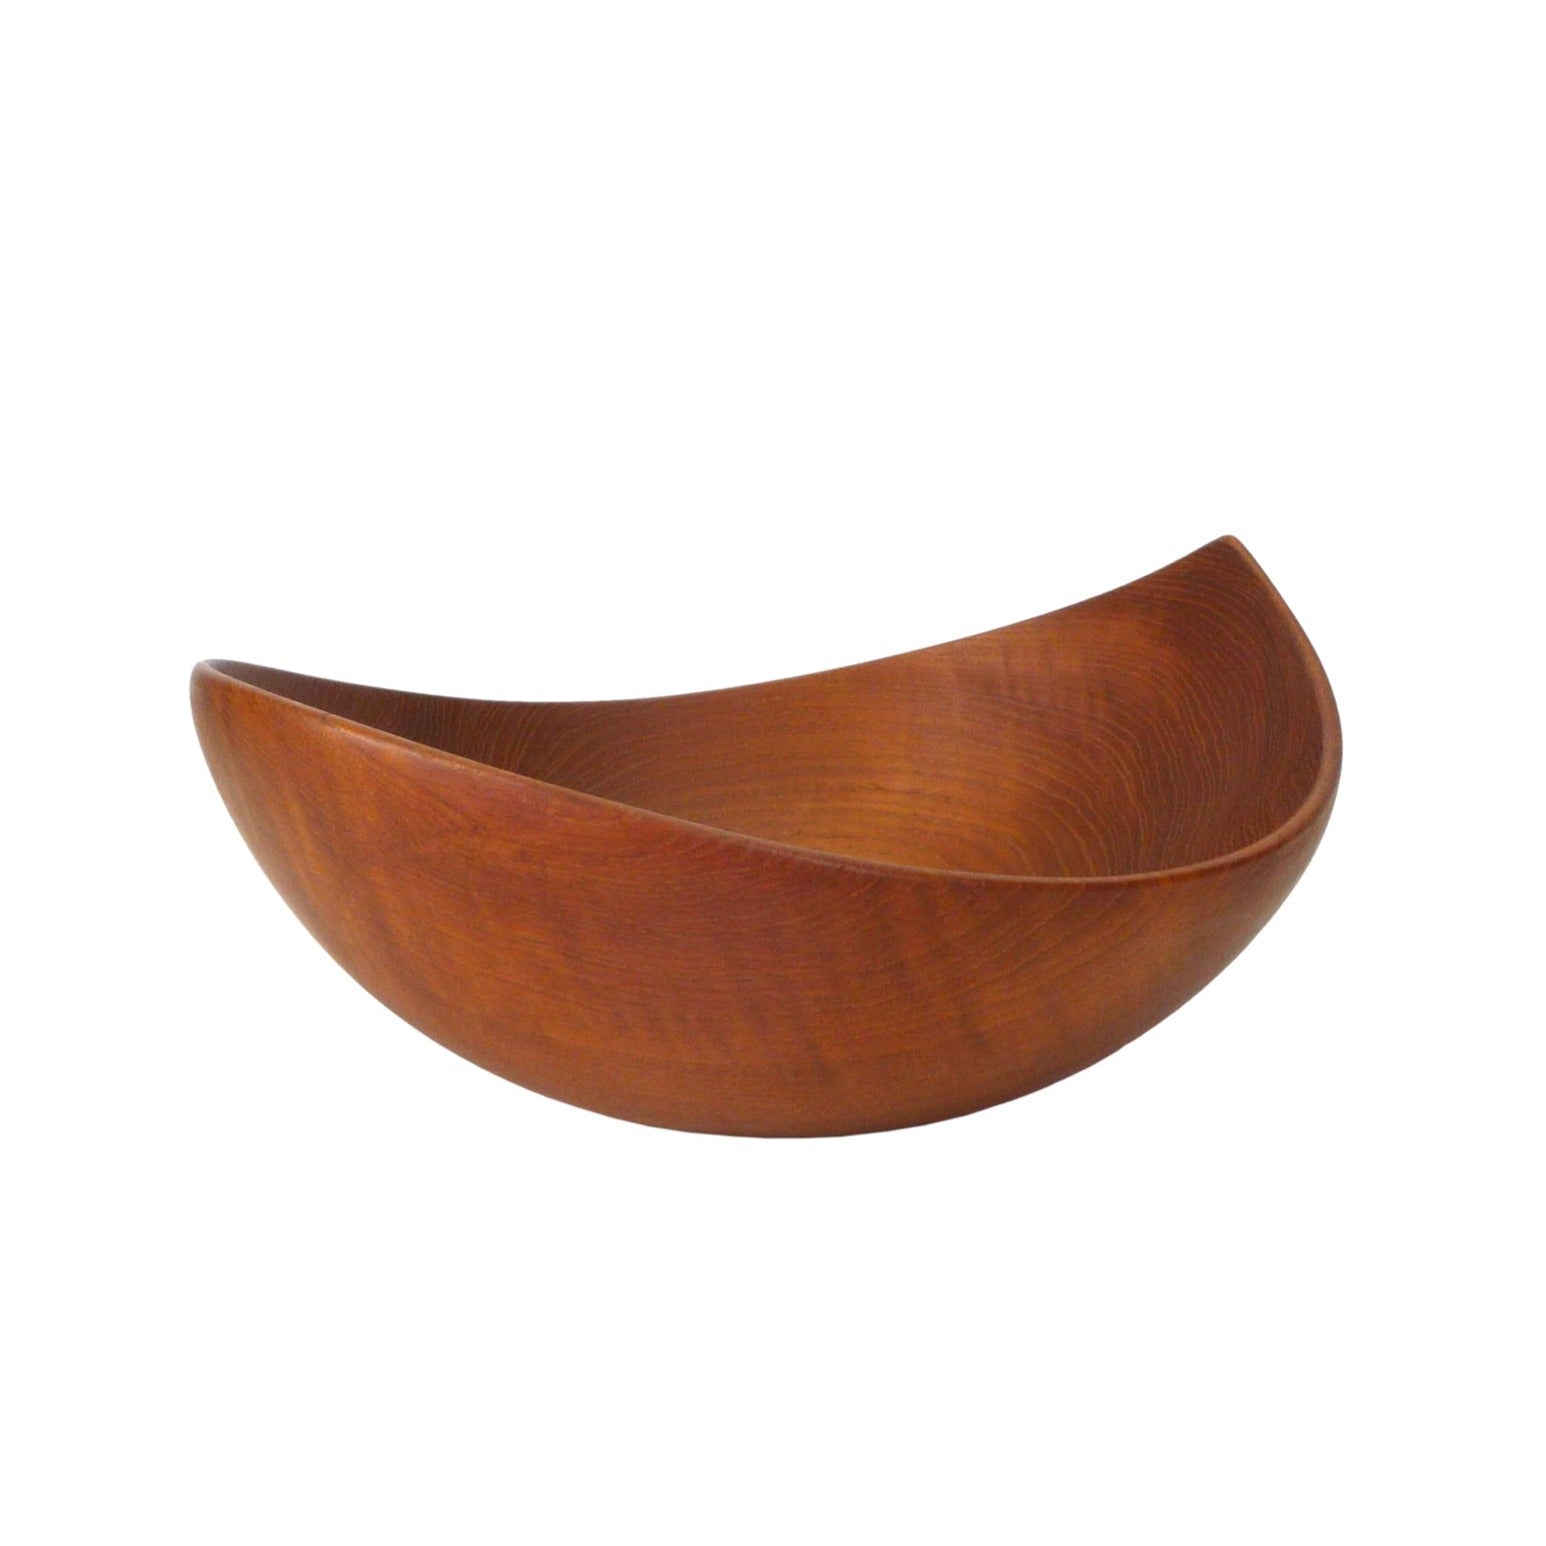 Asymmetrical Pointed Wood Bowl